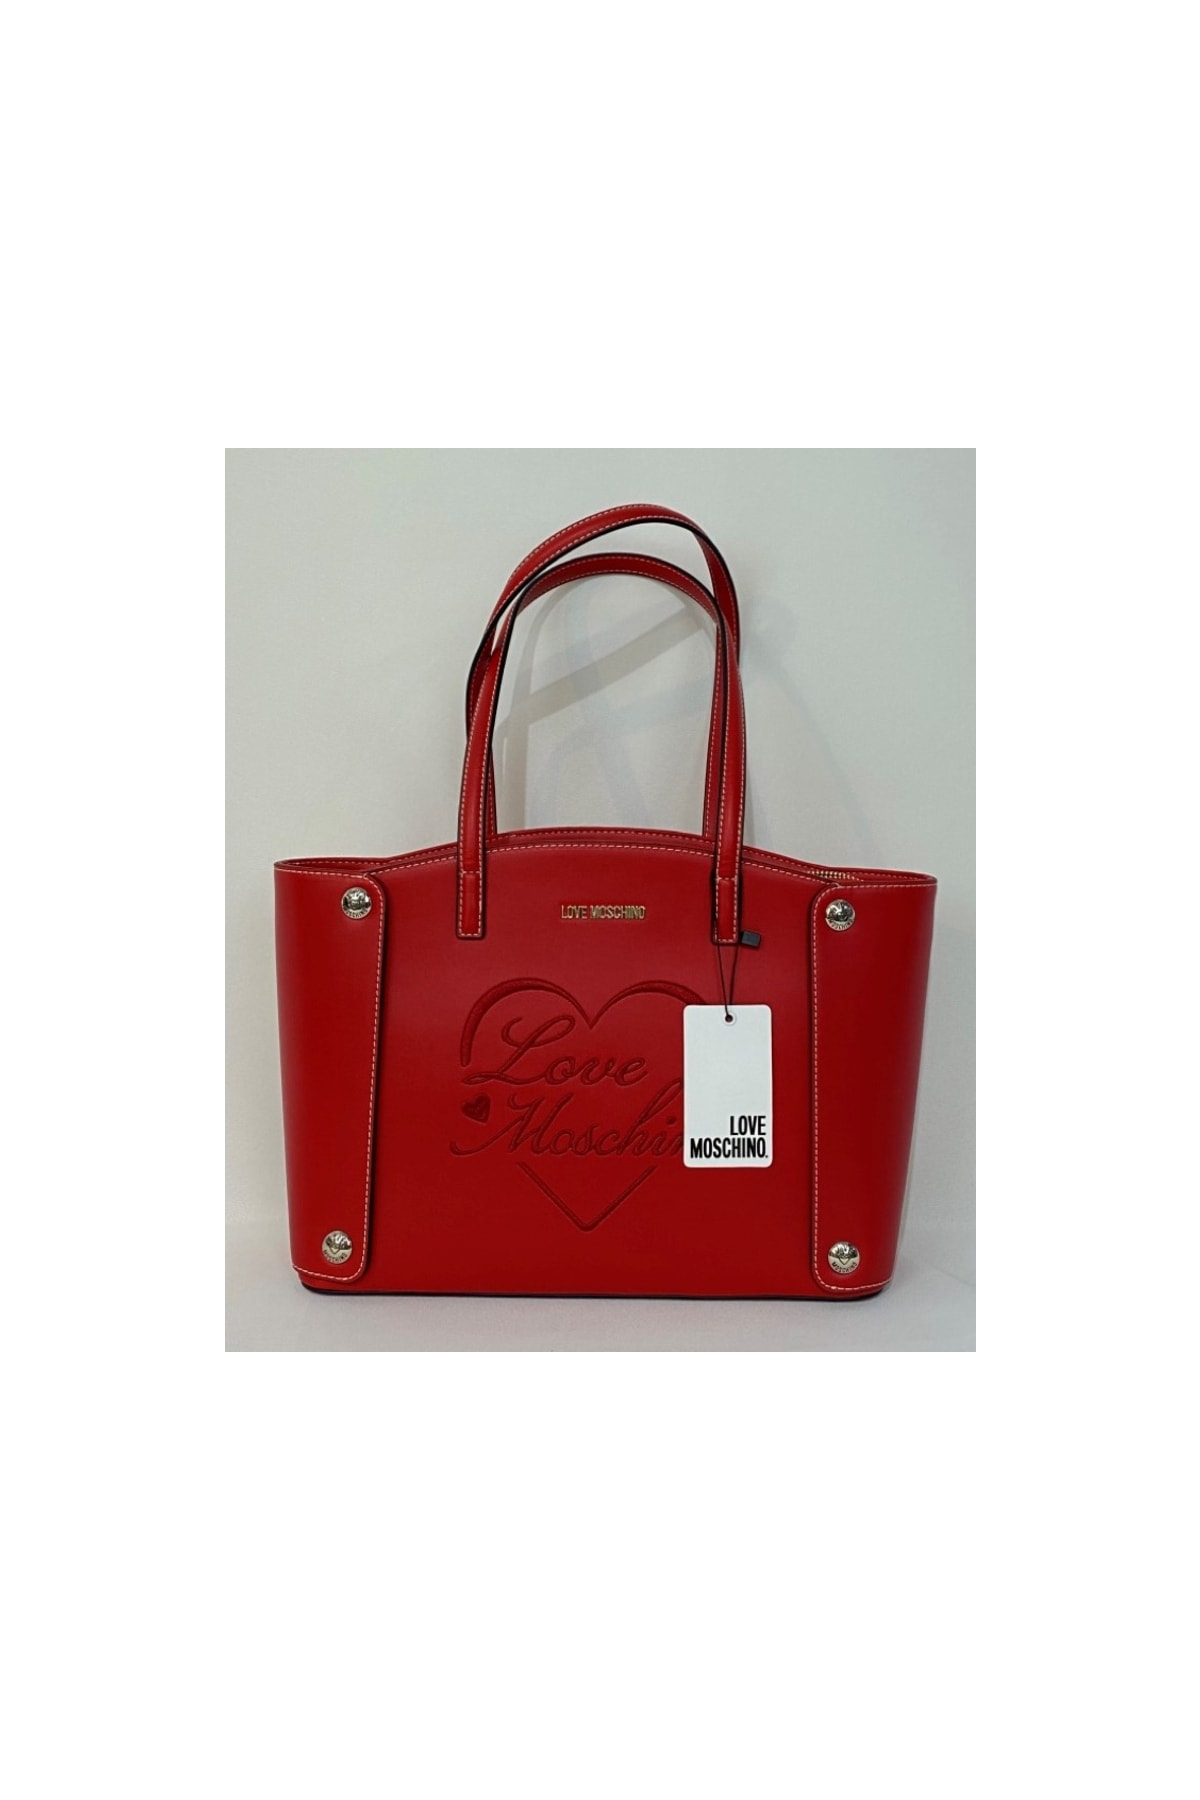 Moschino Handtasche Rot Strukturiert Fast ausverkauft